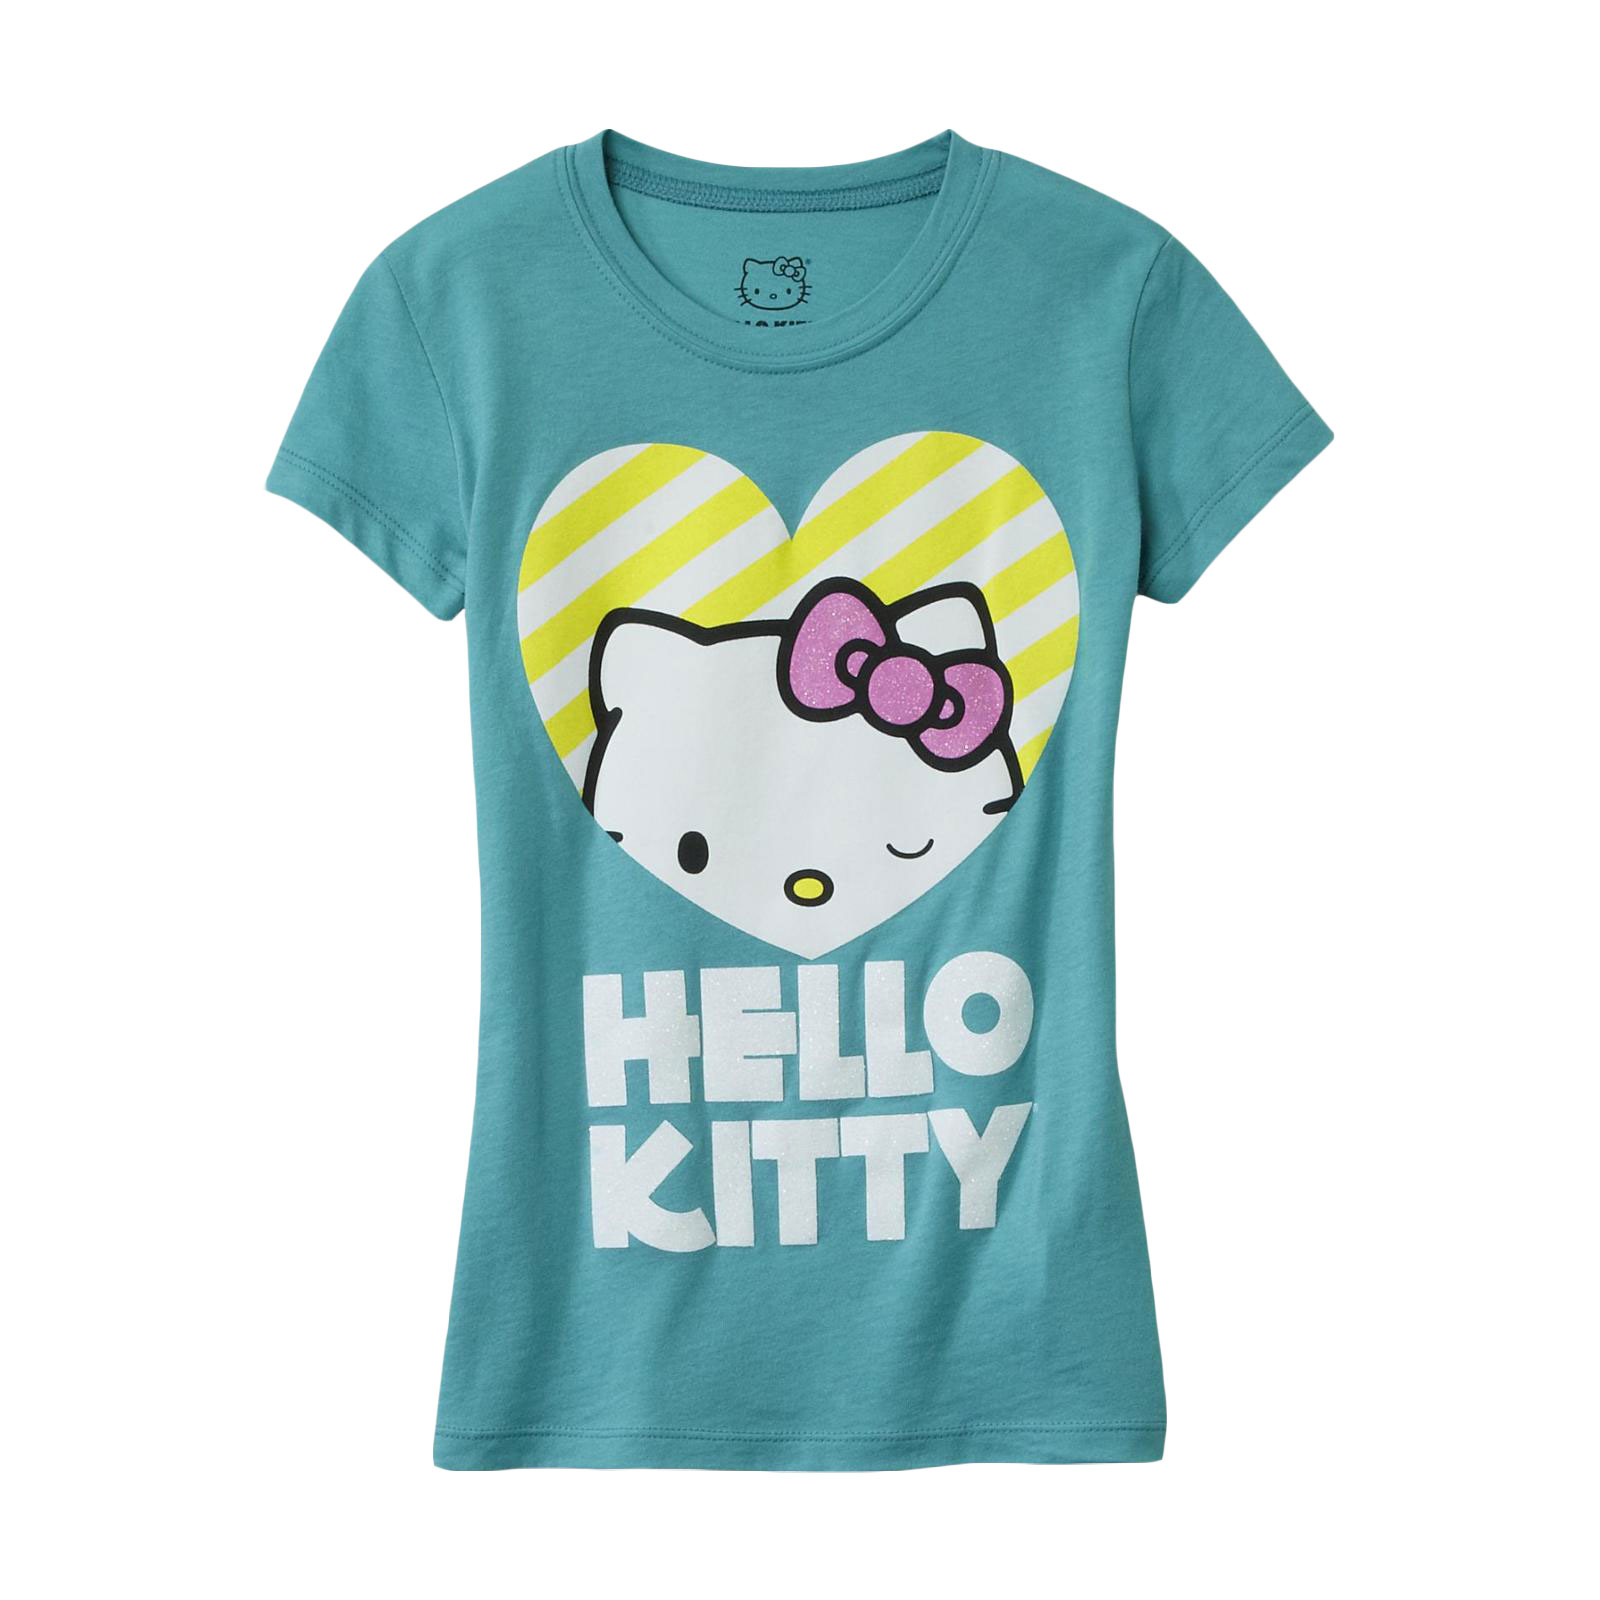 Hello Kitty Girl's T-Shirt - Striped Heart